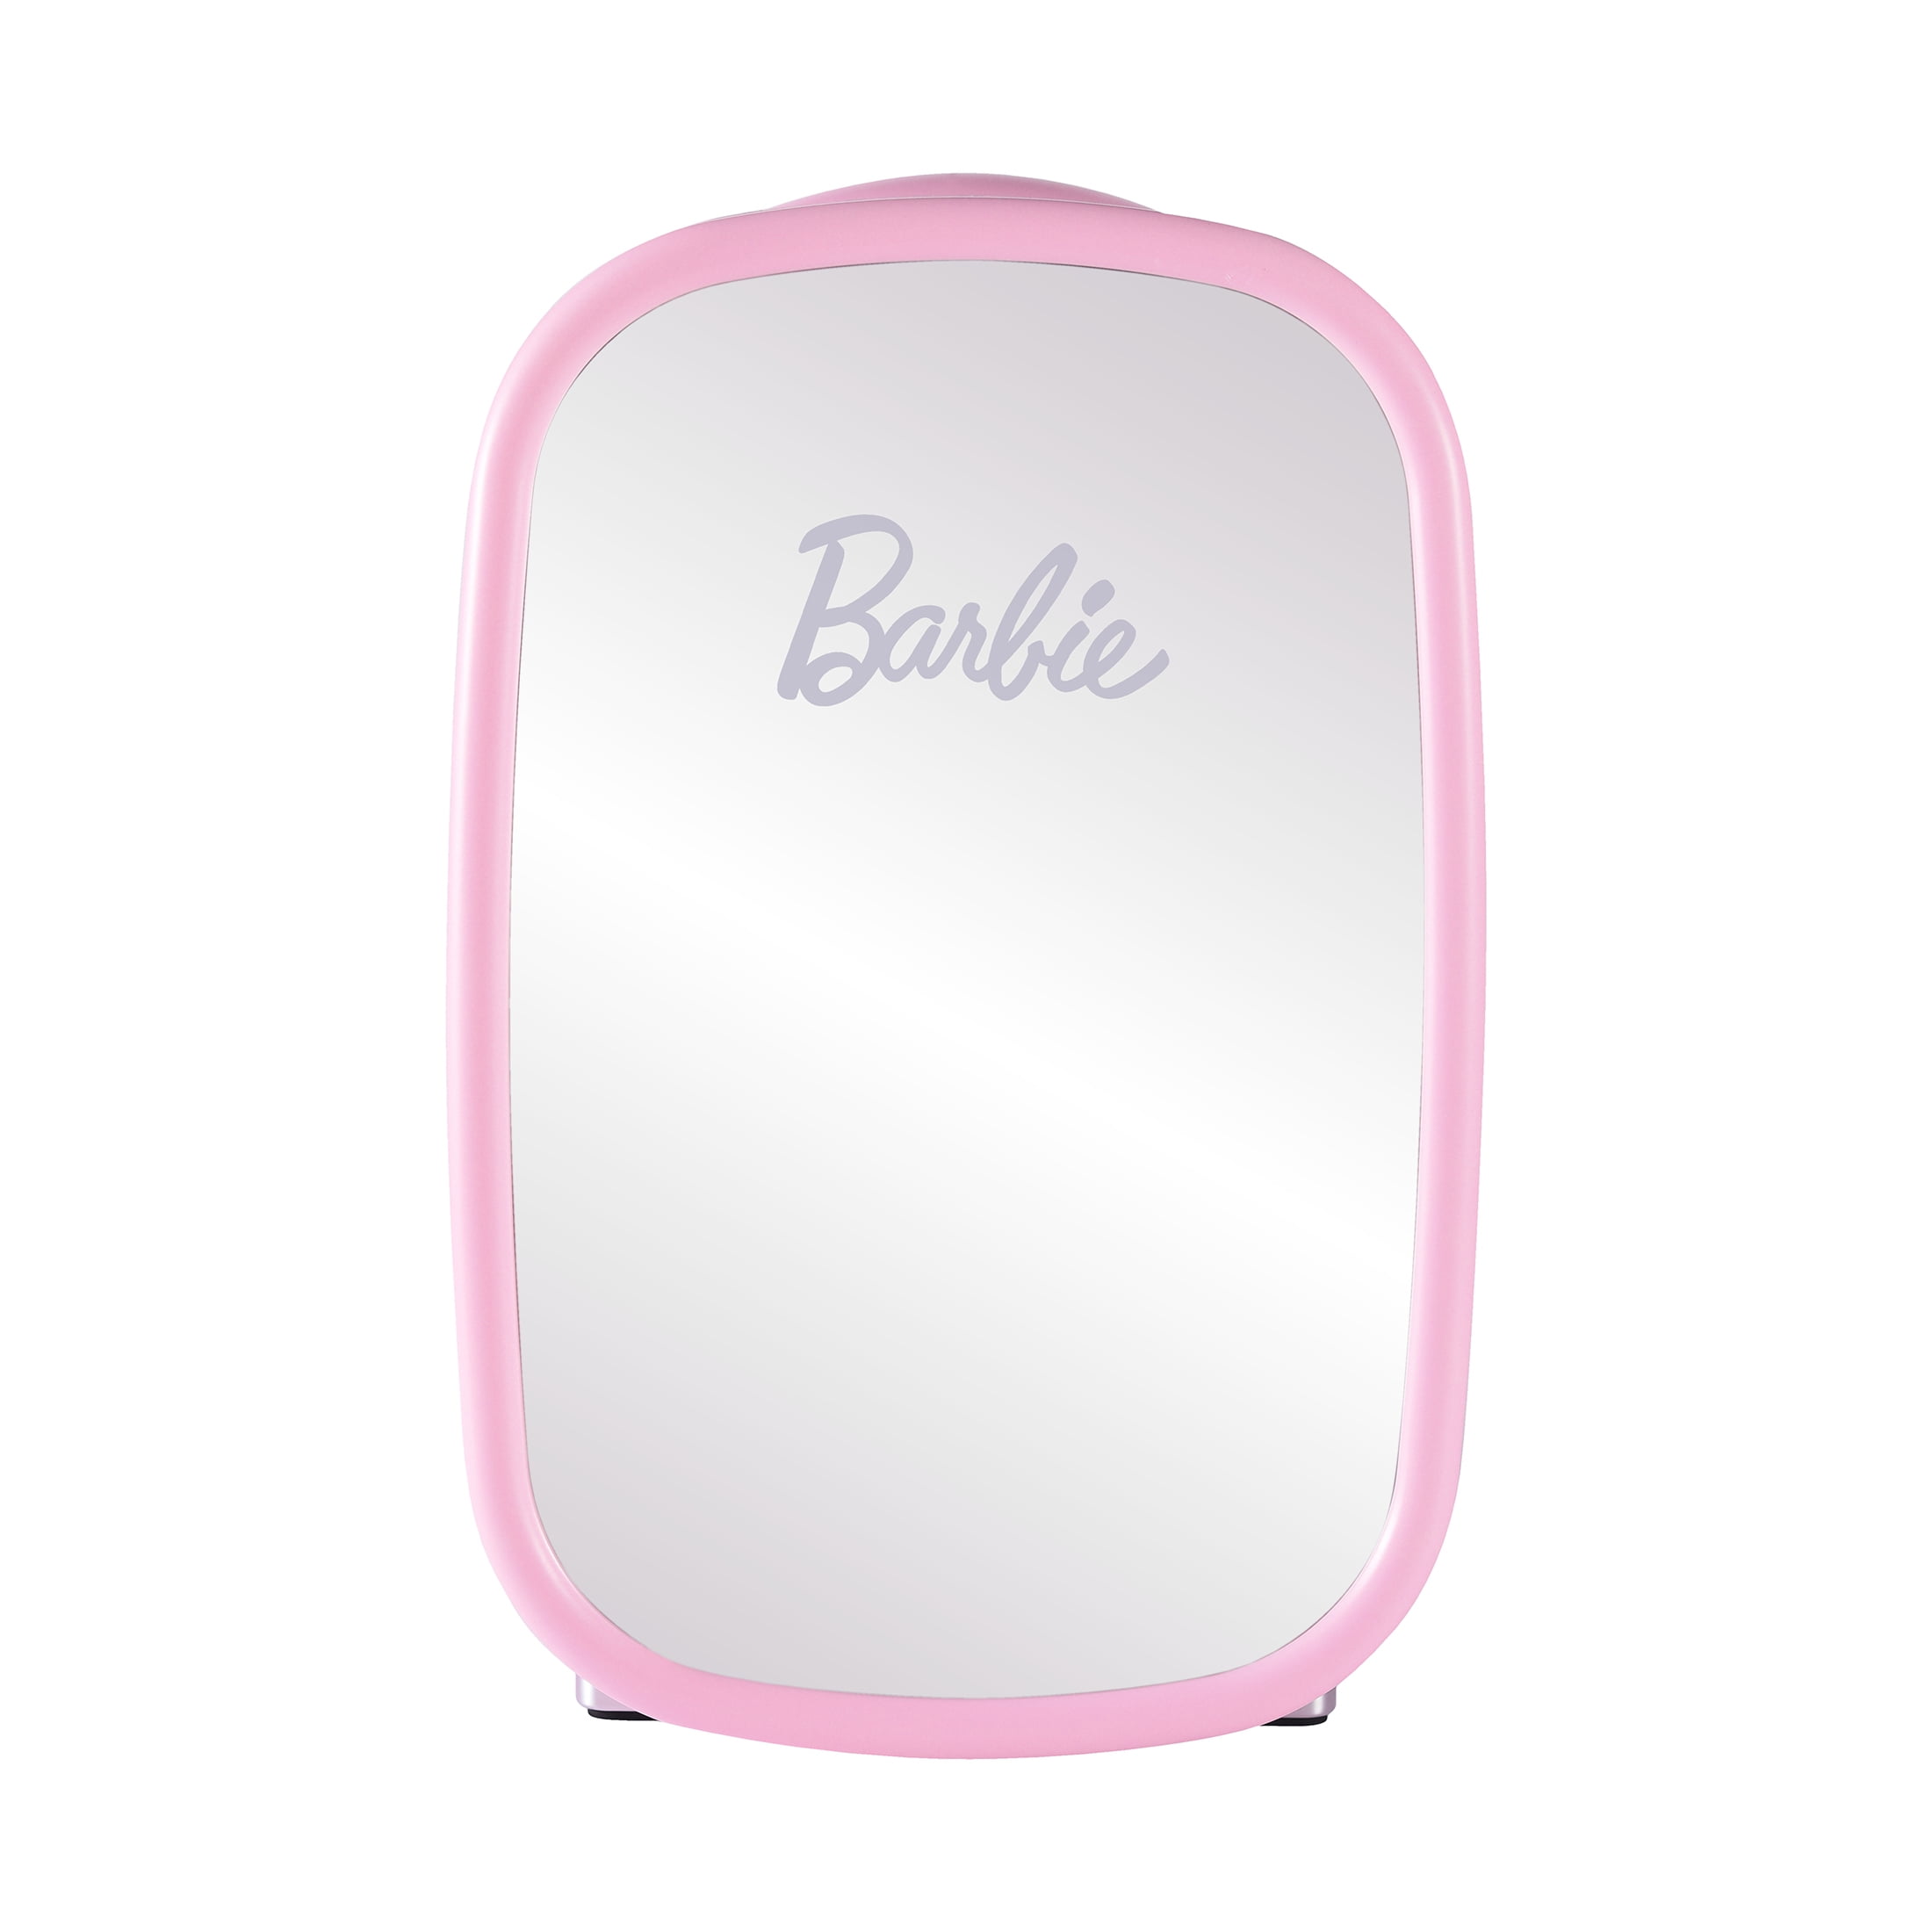 Barbie Pink Beauty Mini Fridge 7L with Glass Mirror Door AC